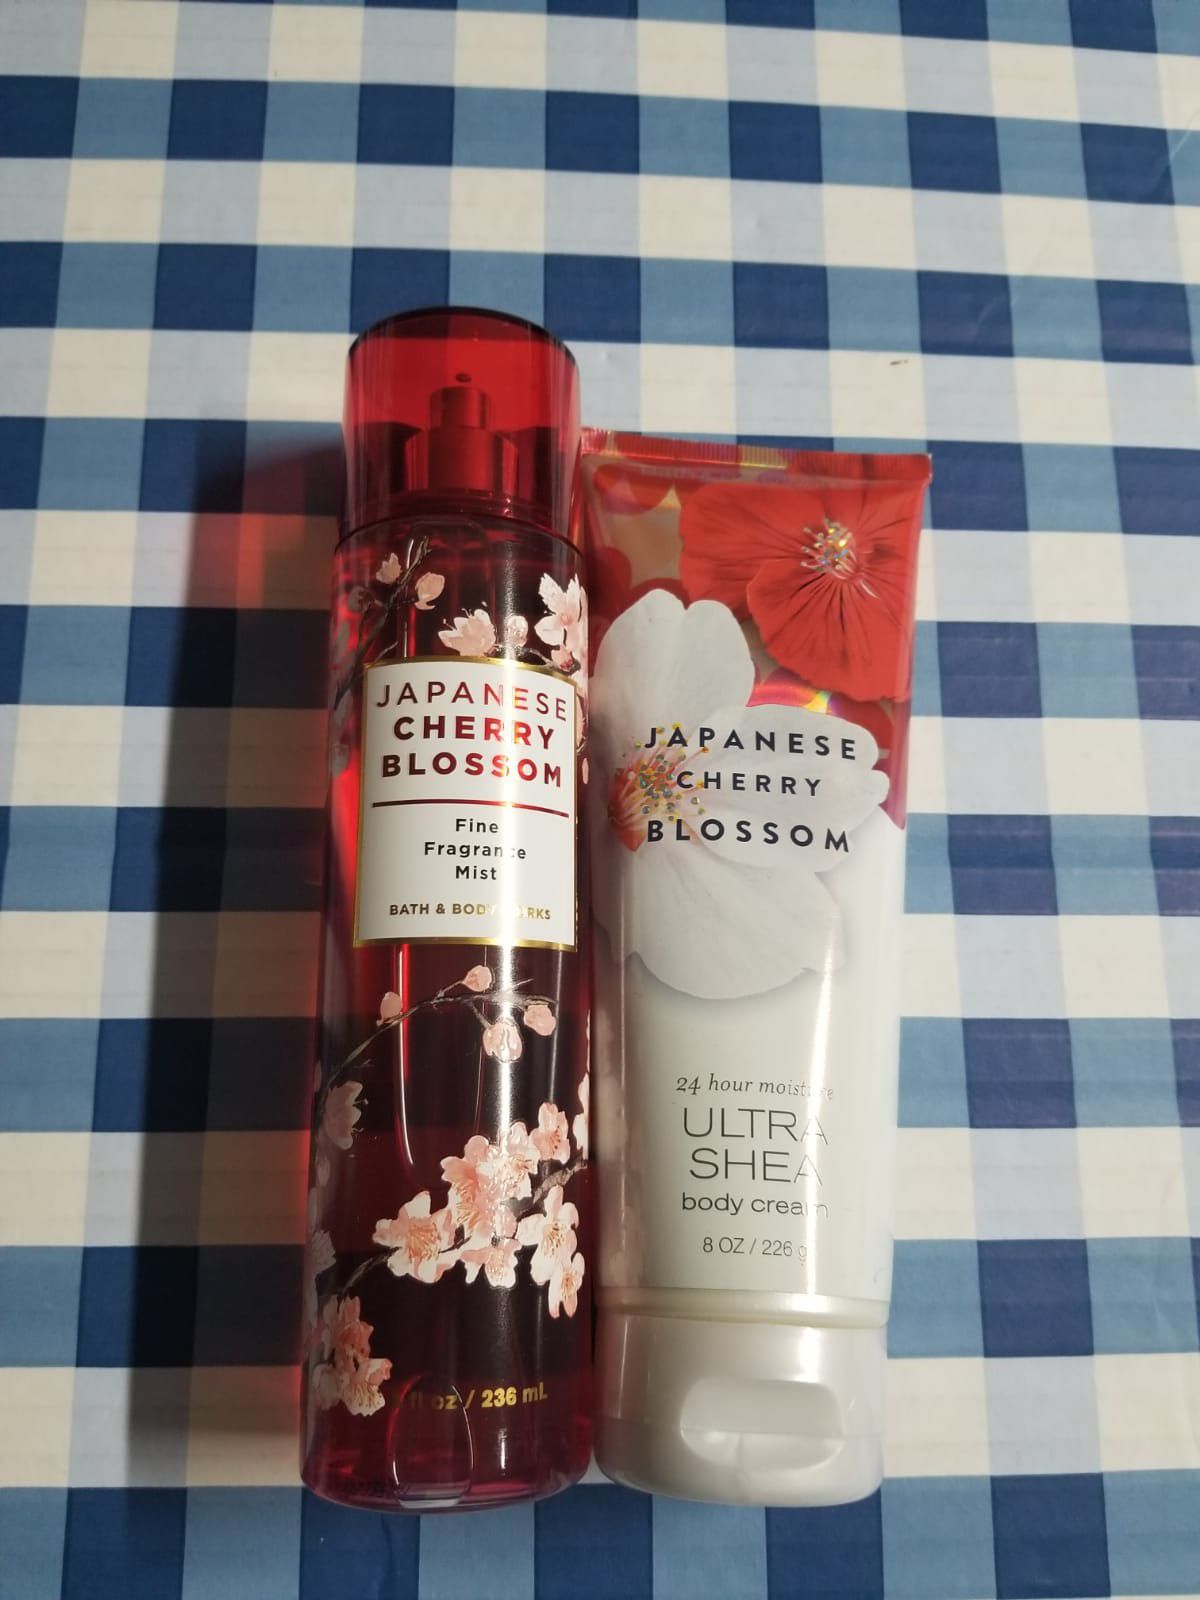 Bath and Body Works Japanese Cherry Blossom set